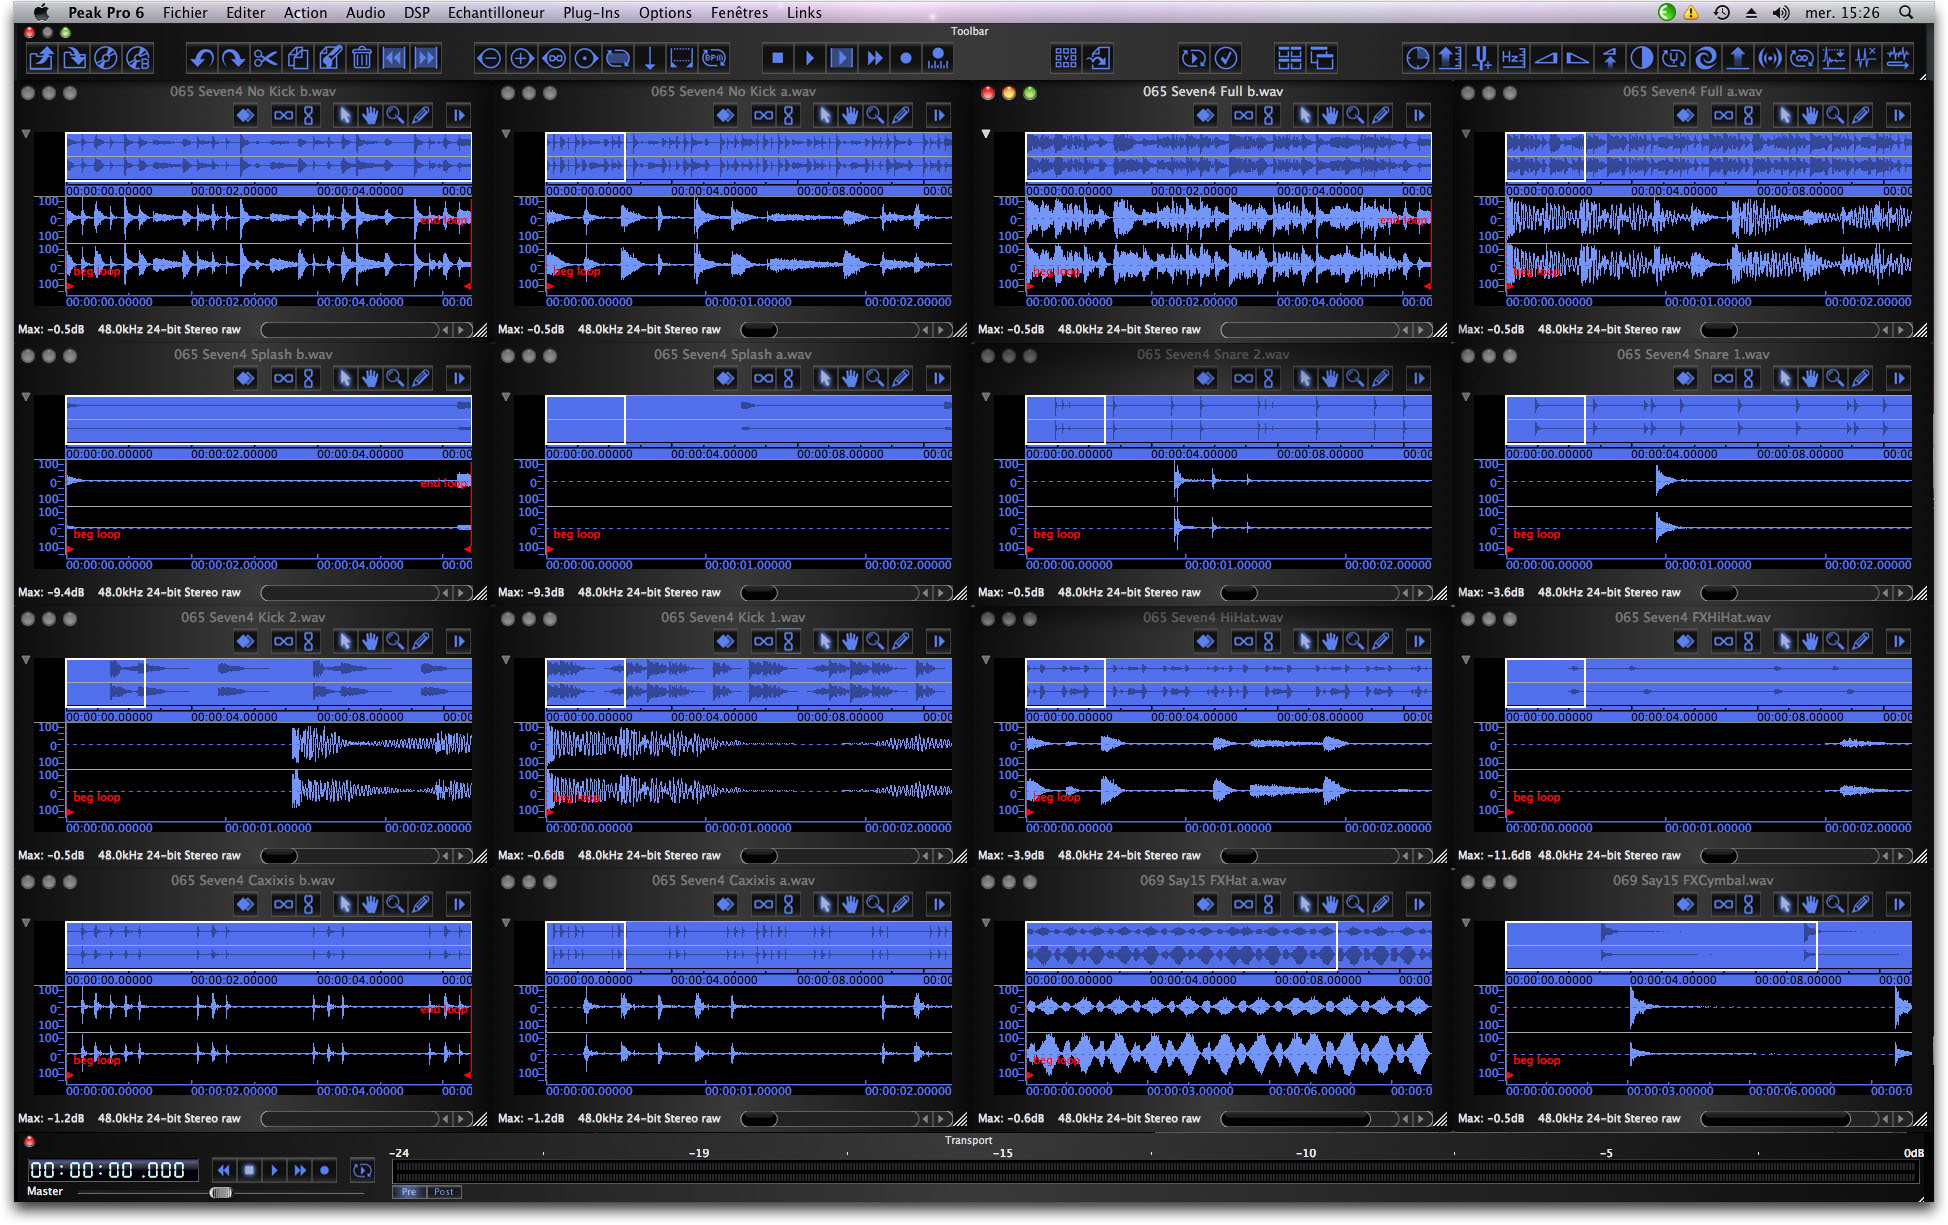 bias peak pro audio editing software for mac